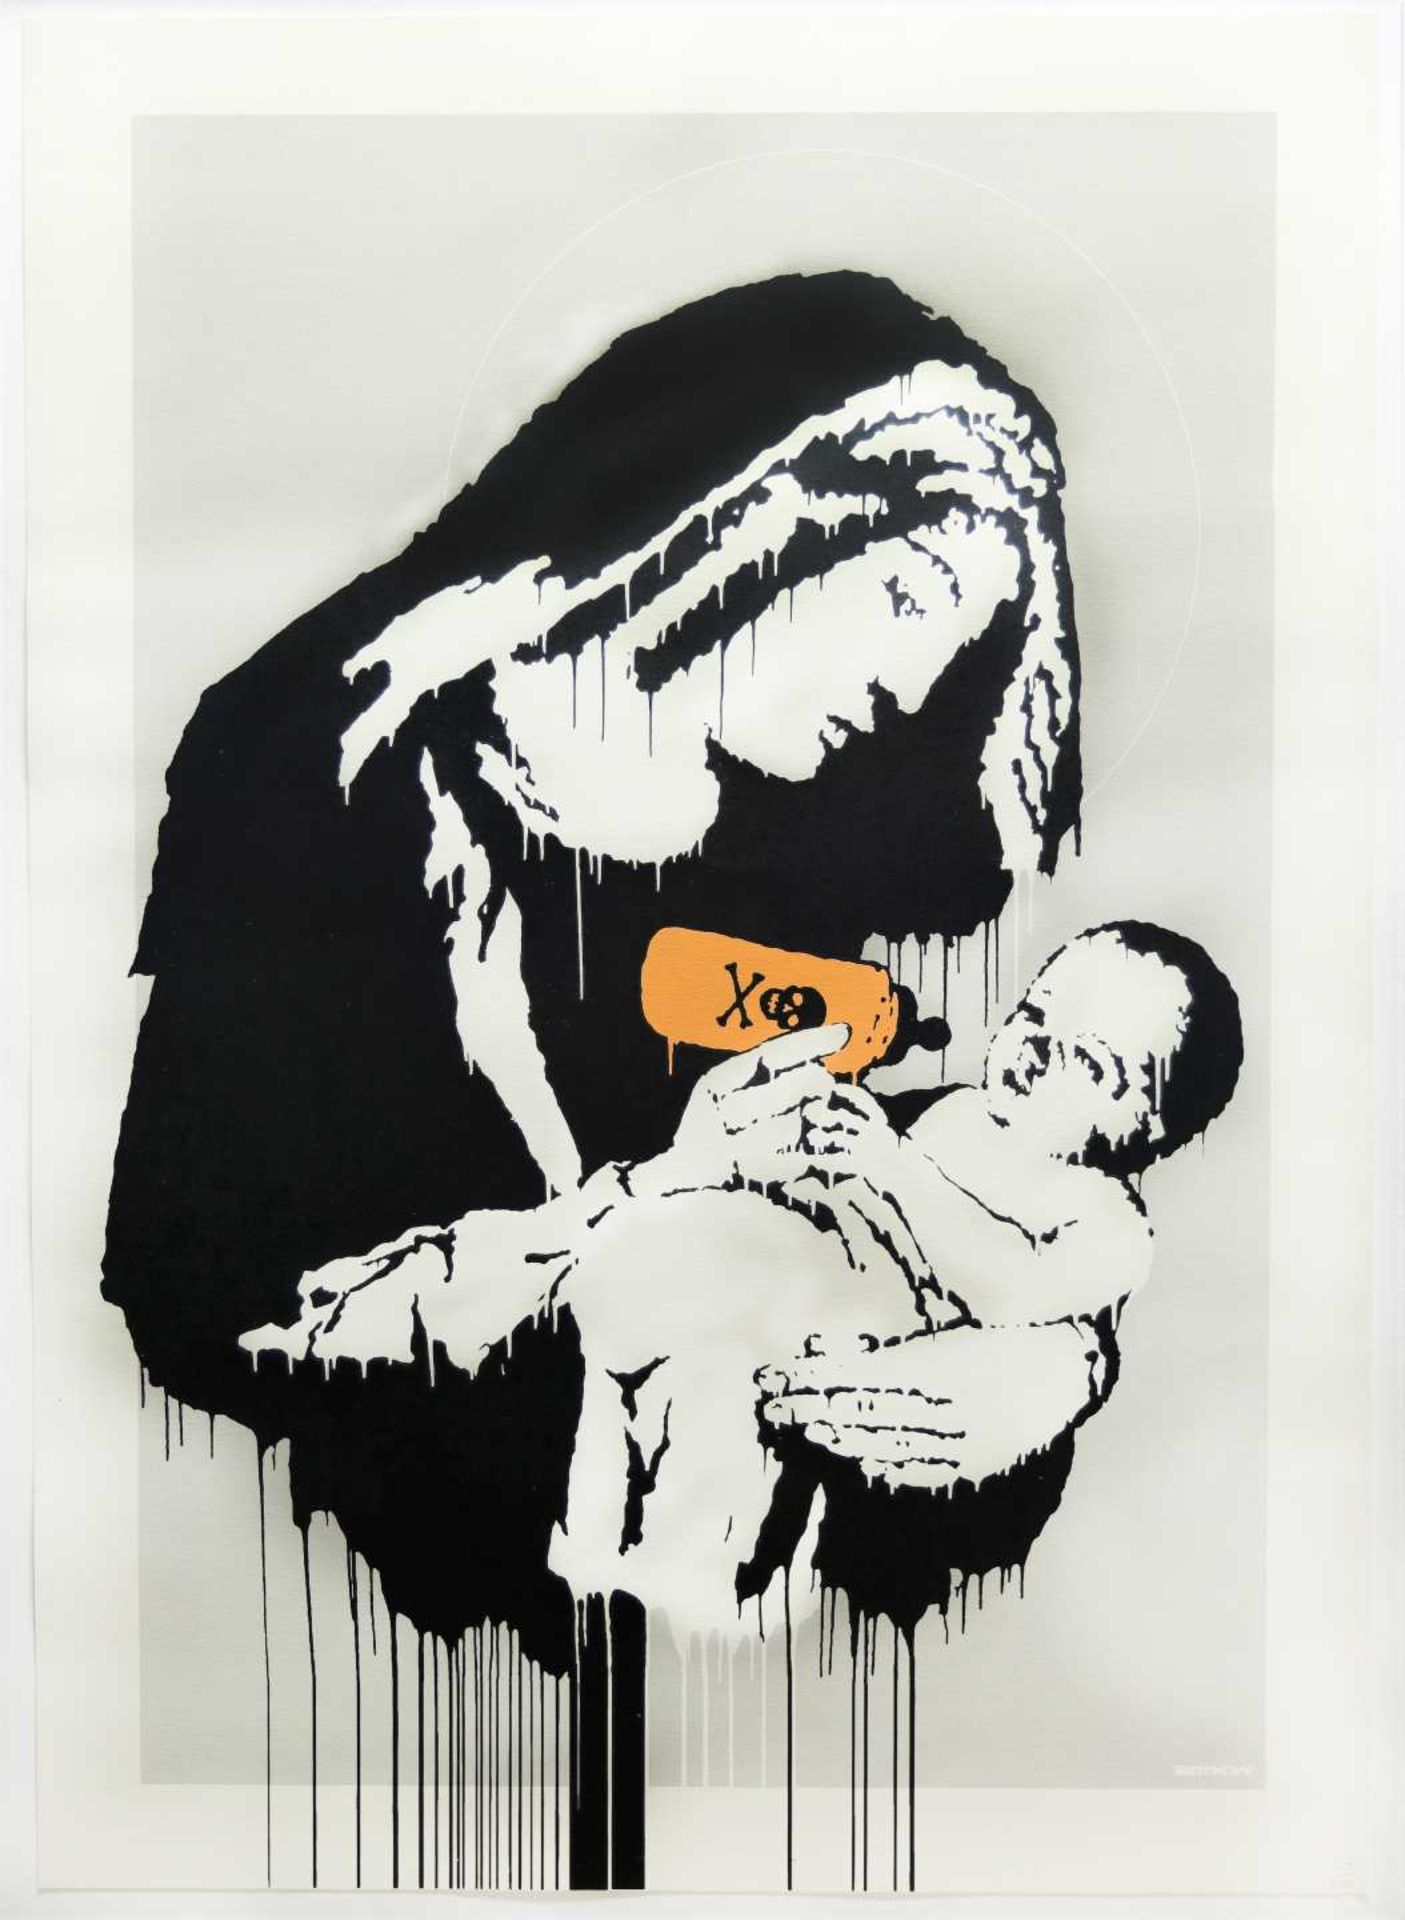 BANKSY (British Street Artist, b. 1974)